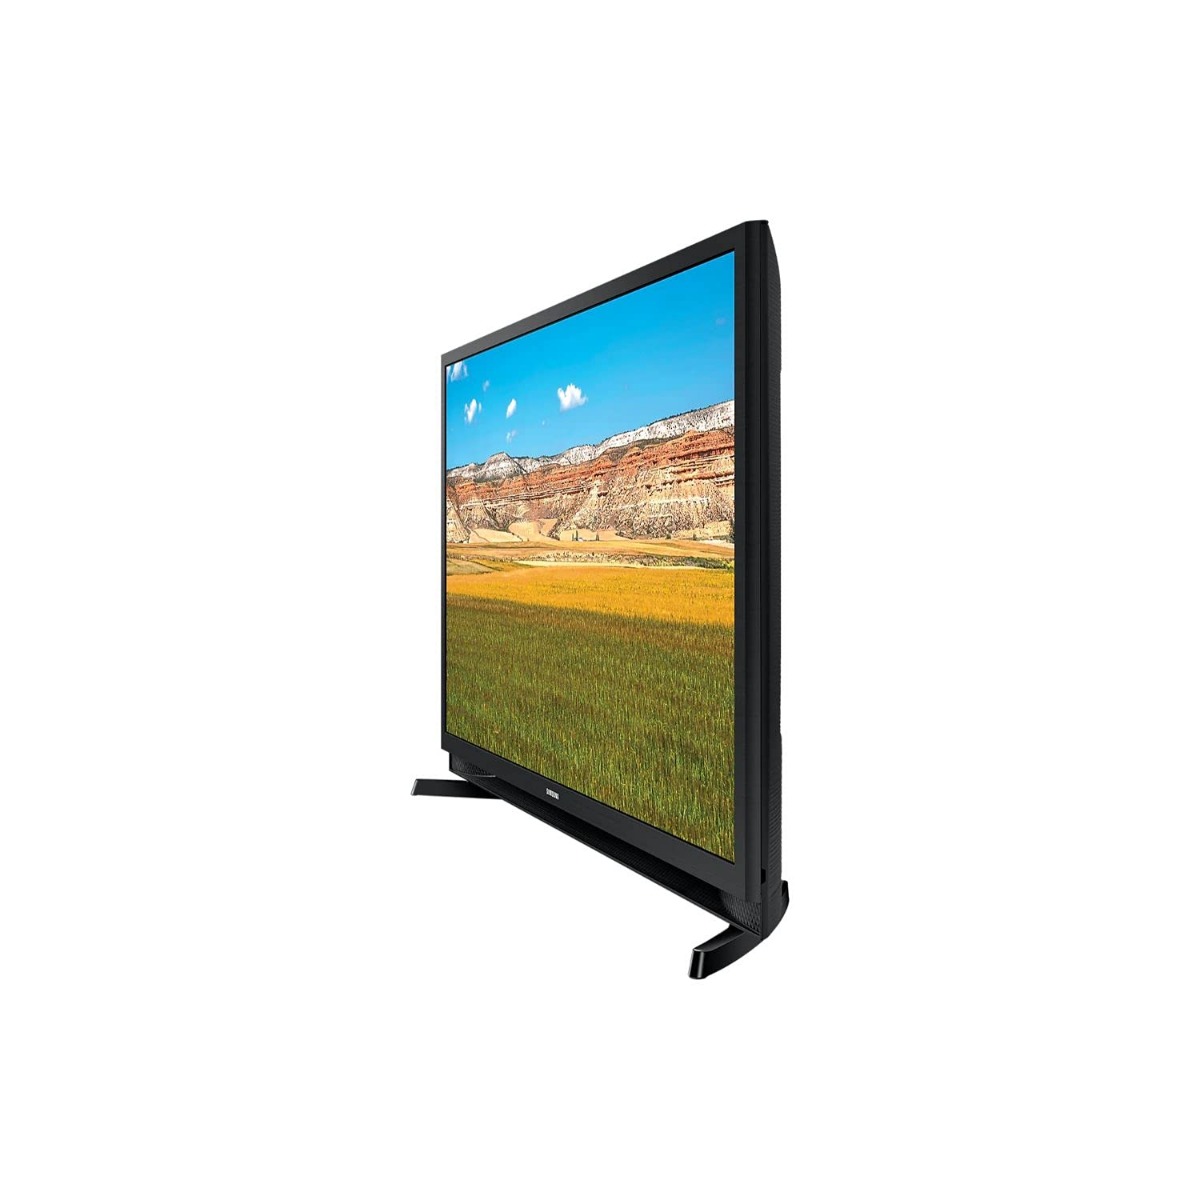 Samsung 80 cm (32 inches) HD Smart LED TV (32T4900,Black)-11250